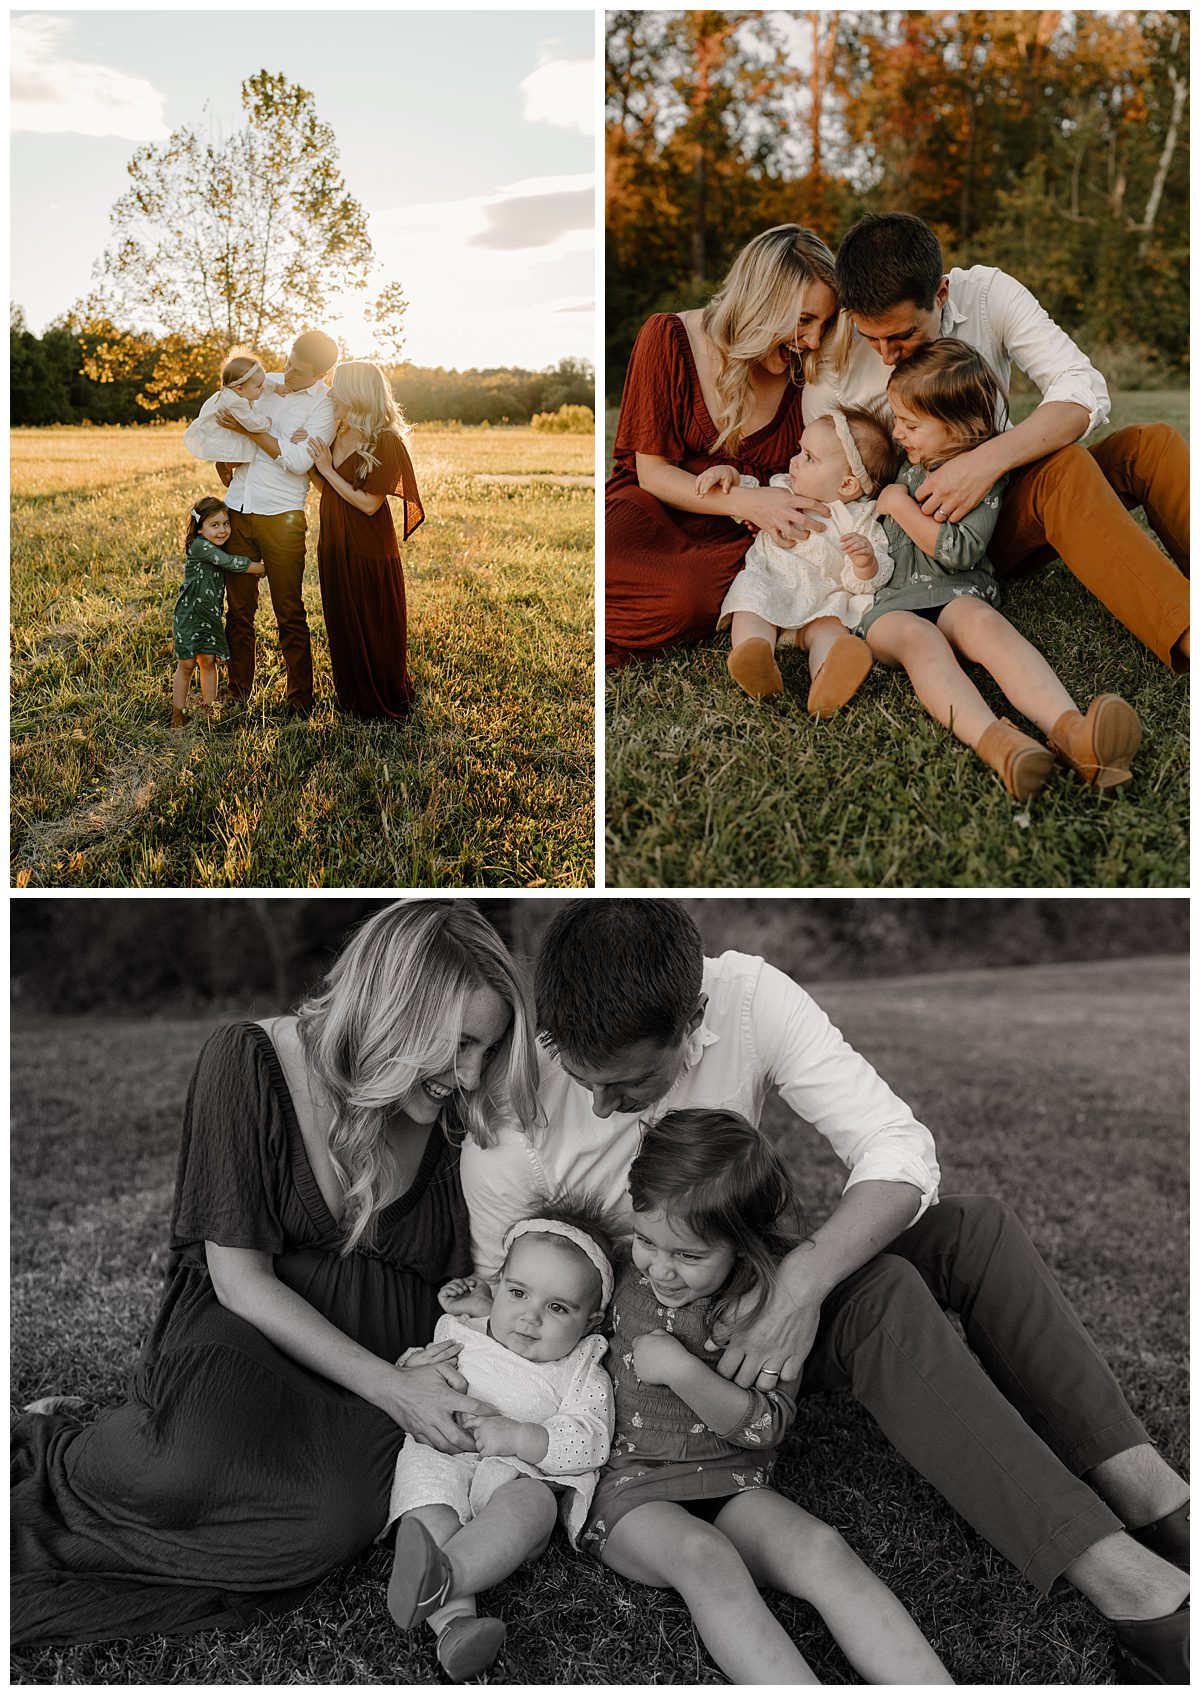 Family photos with romantic vintage vibes by Winston-Salem, NC portrait photographer